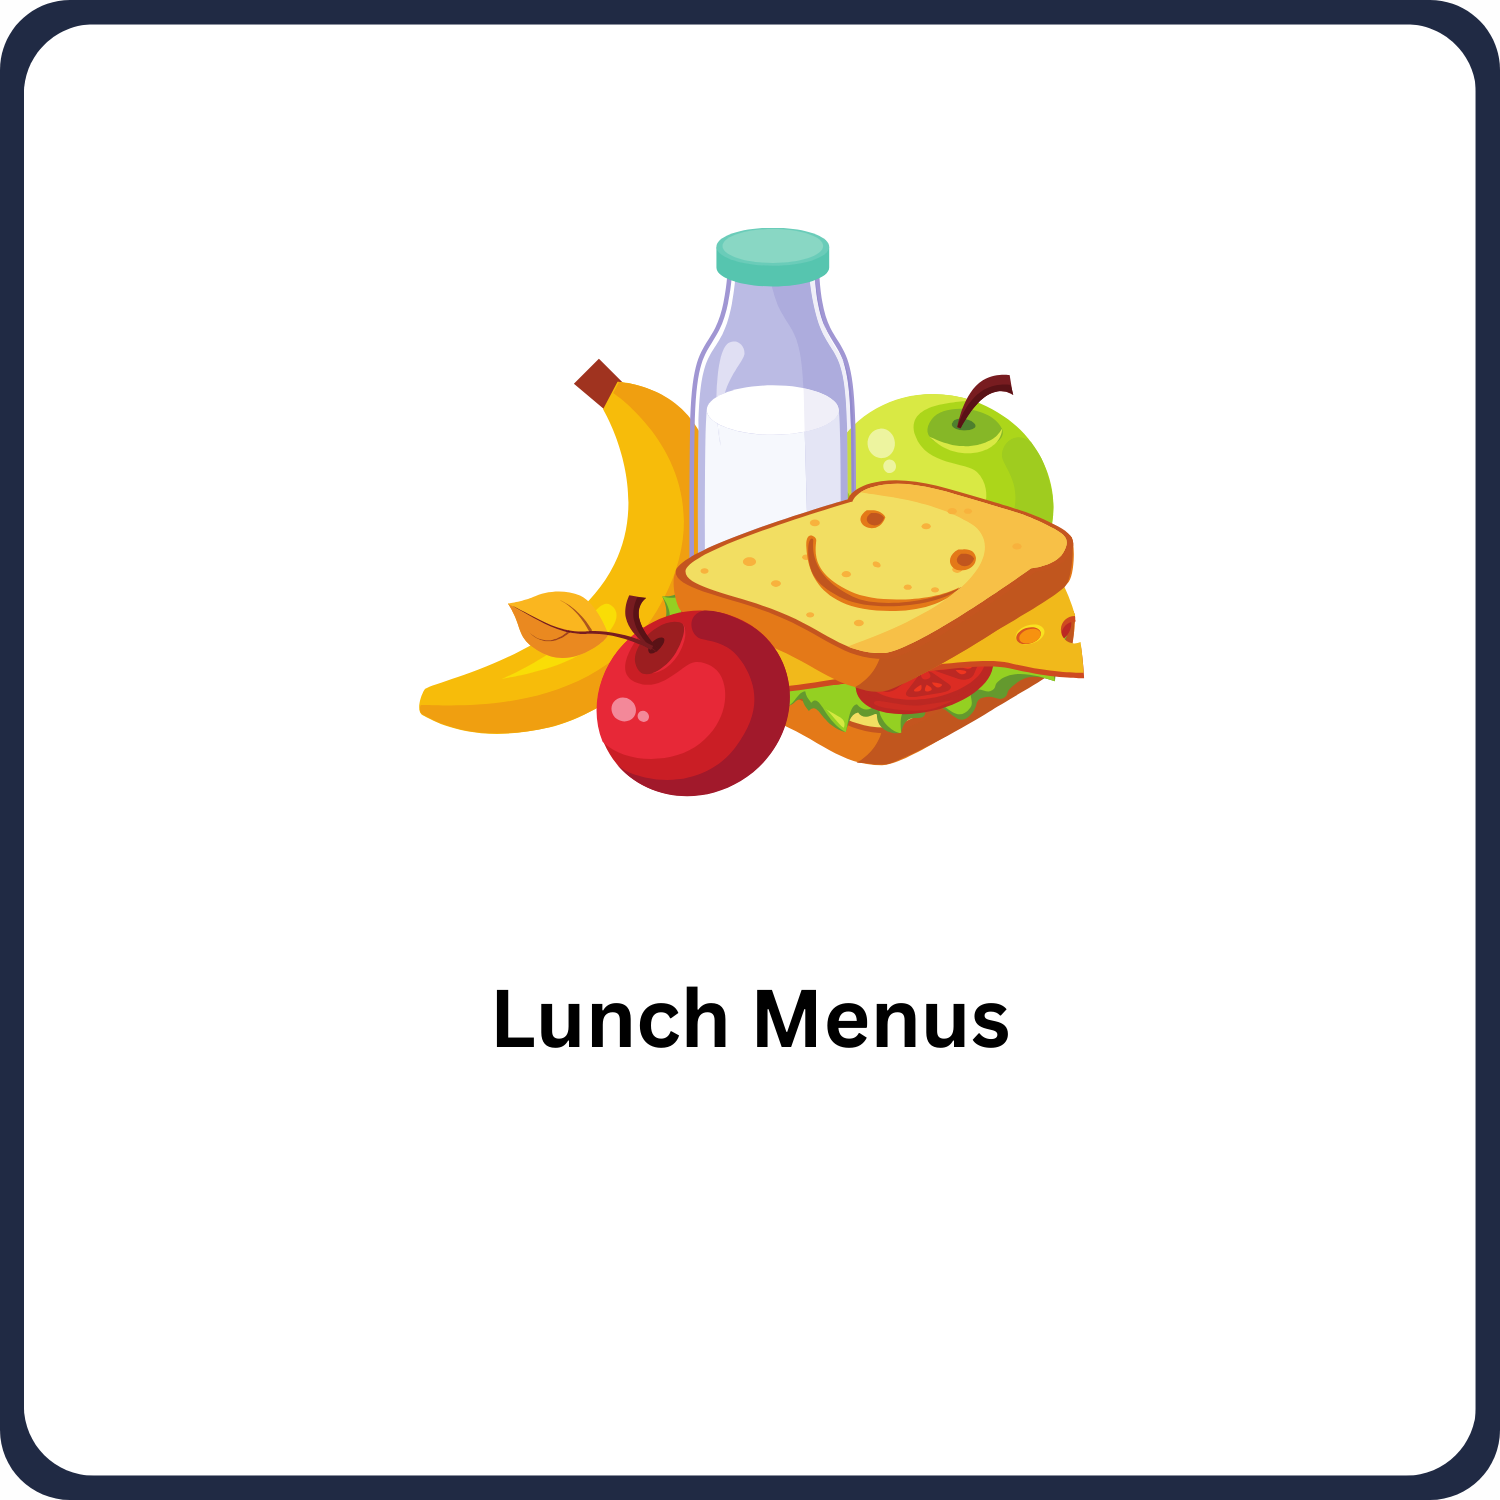 Lunch Menus